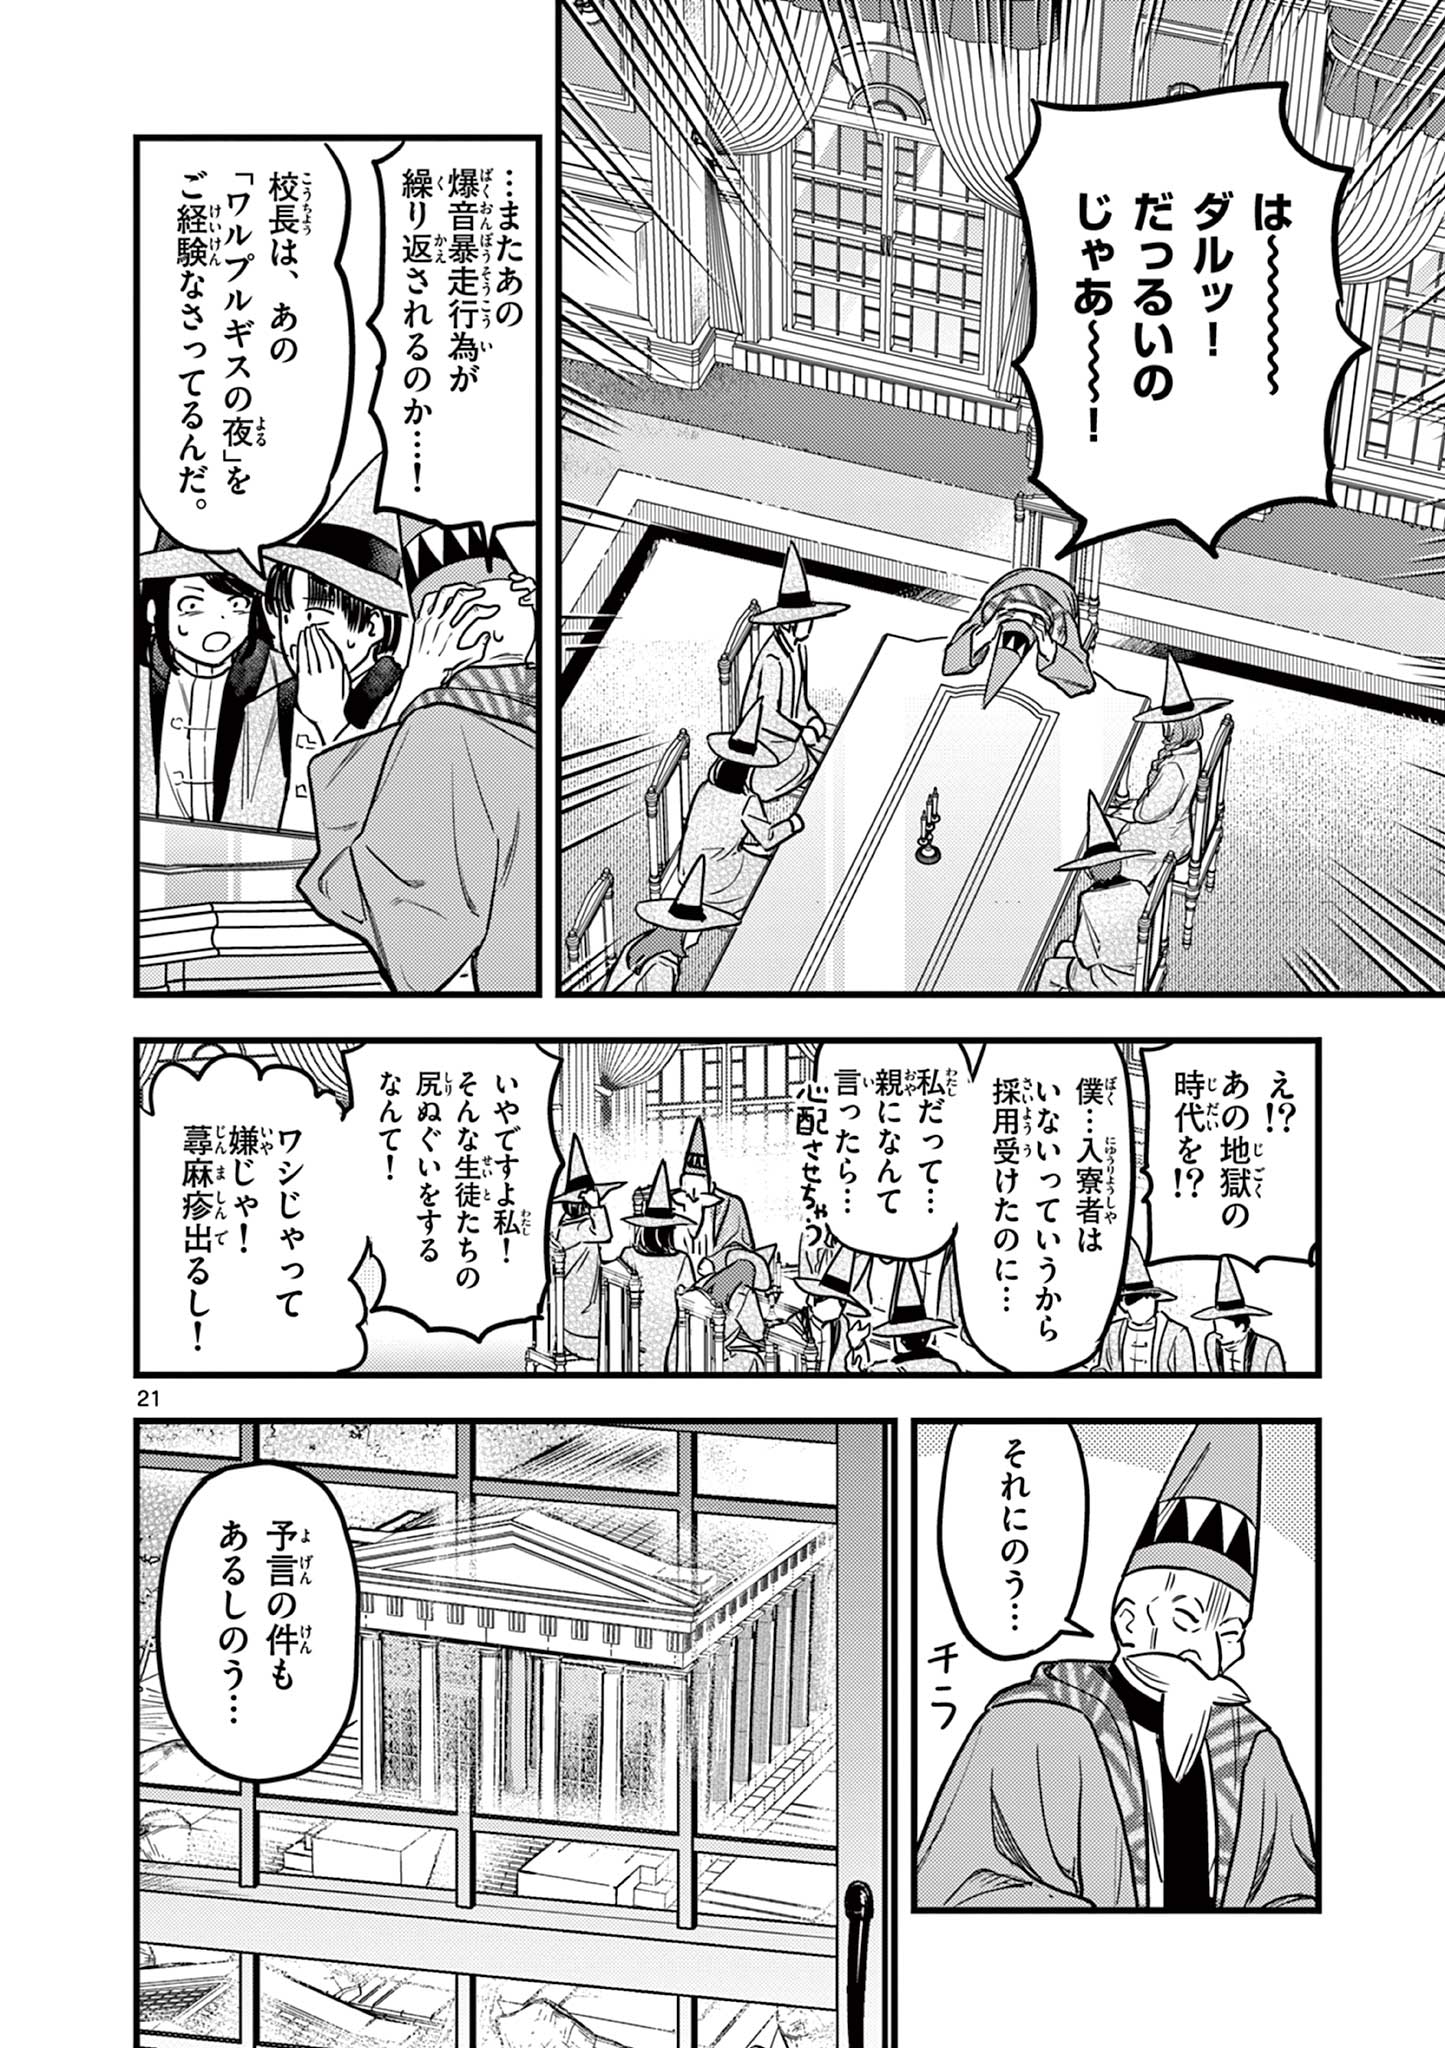 Kuro Mahou Ryou no Sanakunin - Chapter 1 - Page 22